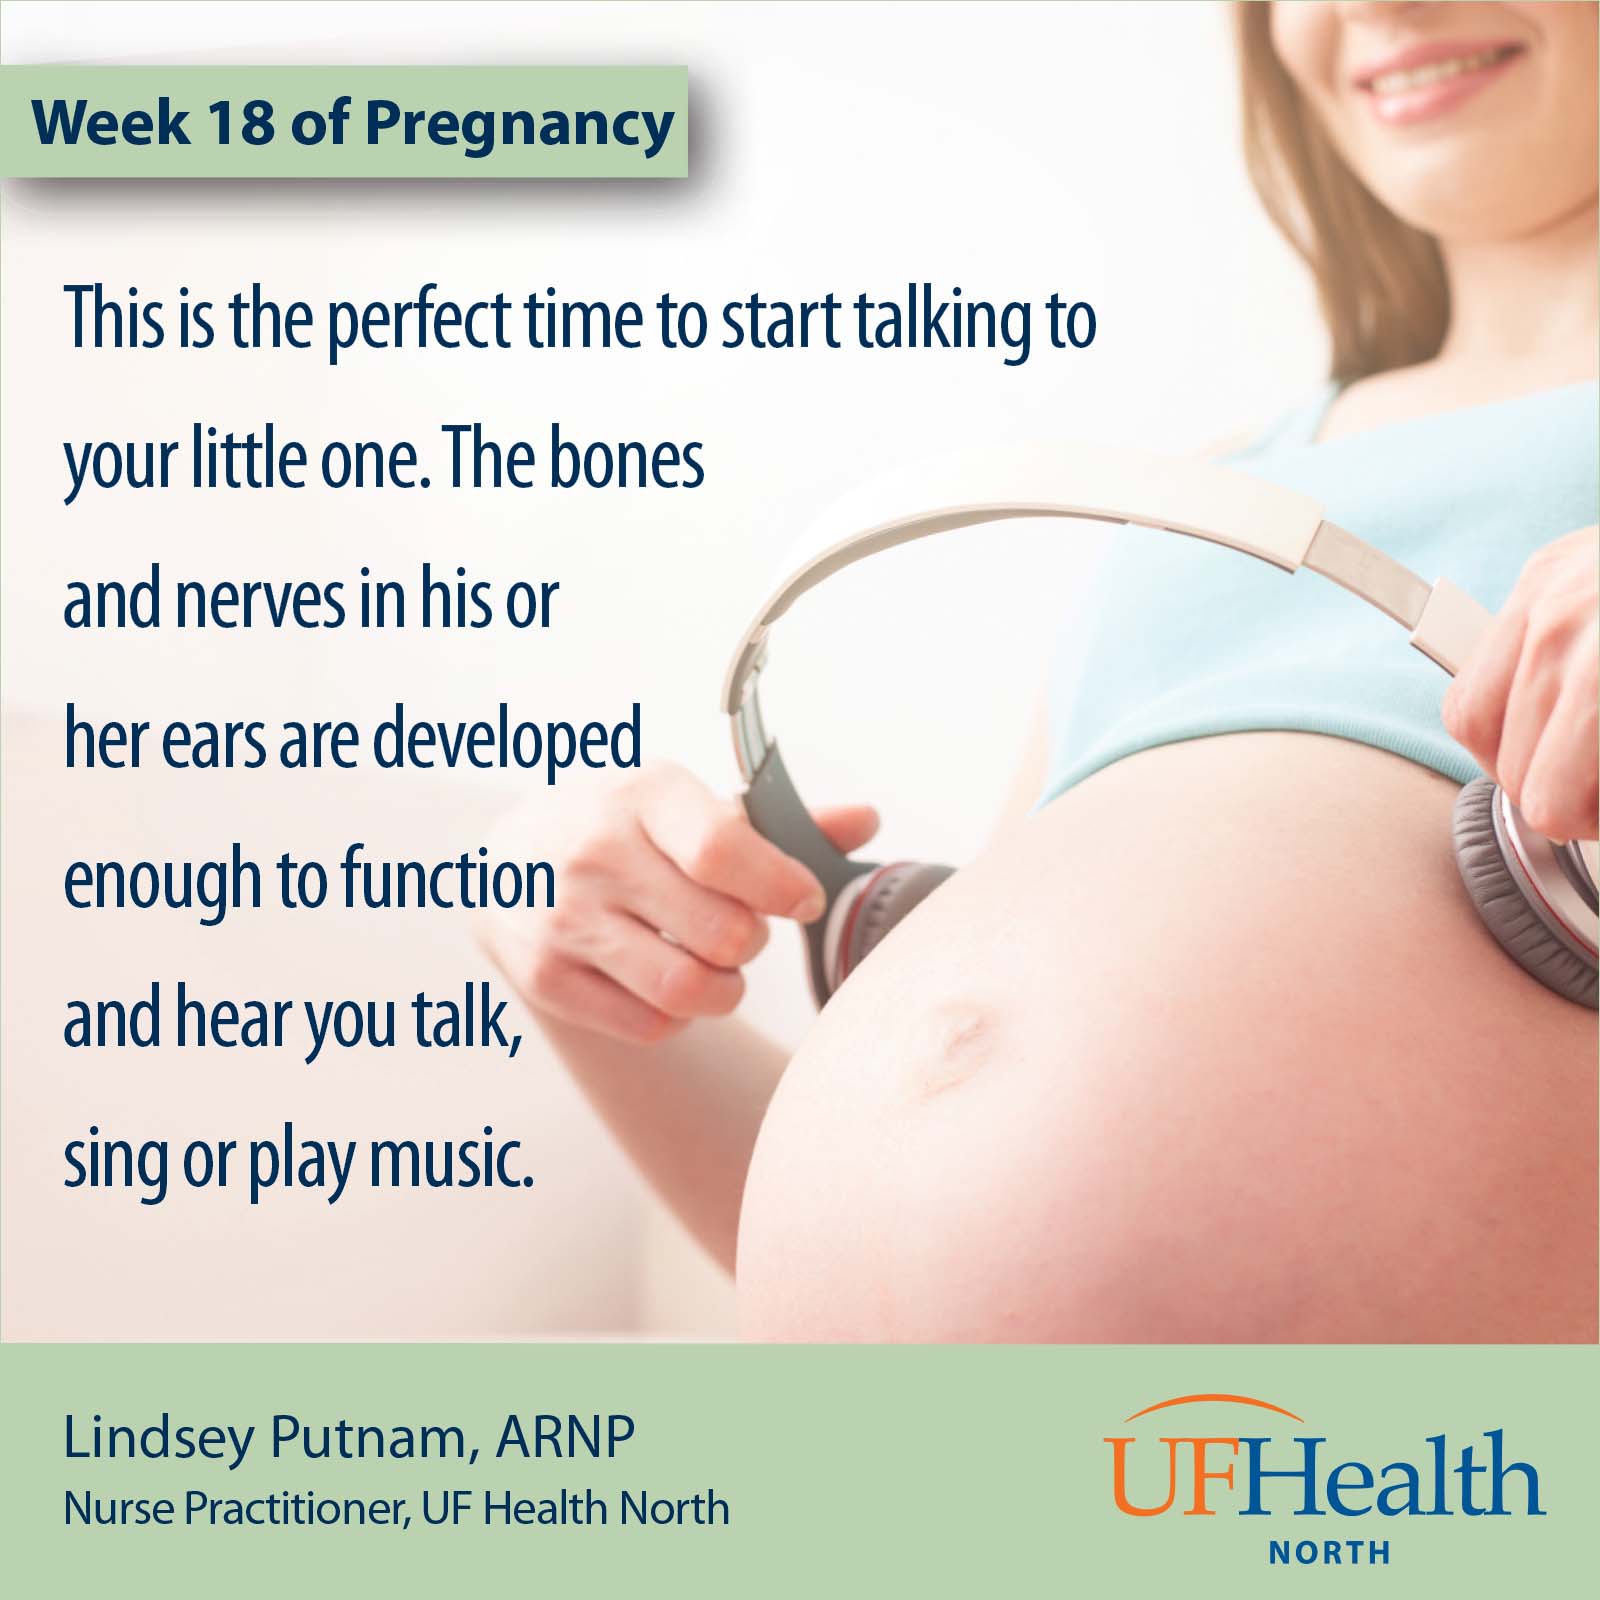 UF Health North pregnancy tip 18